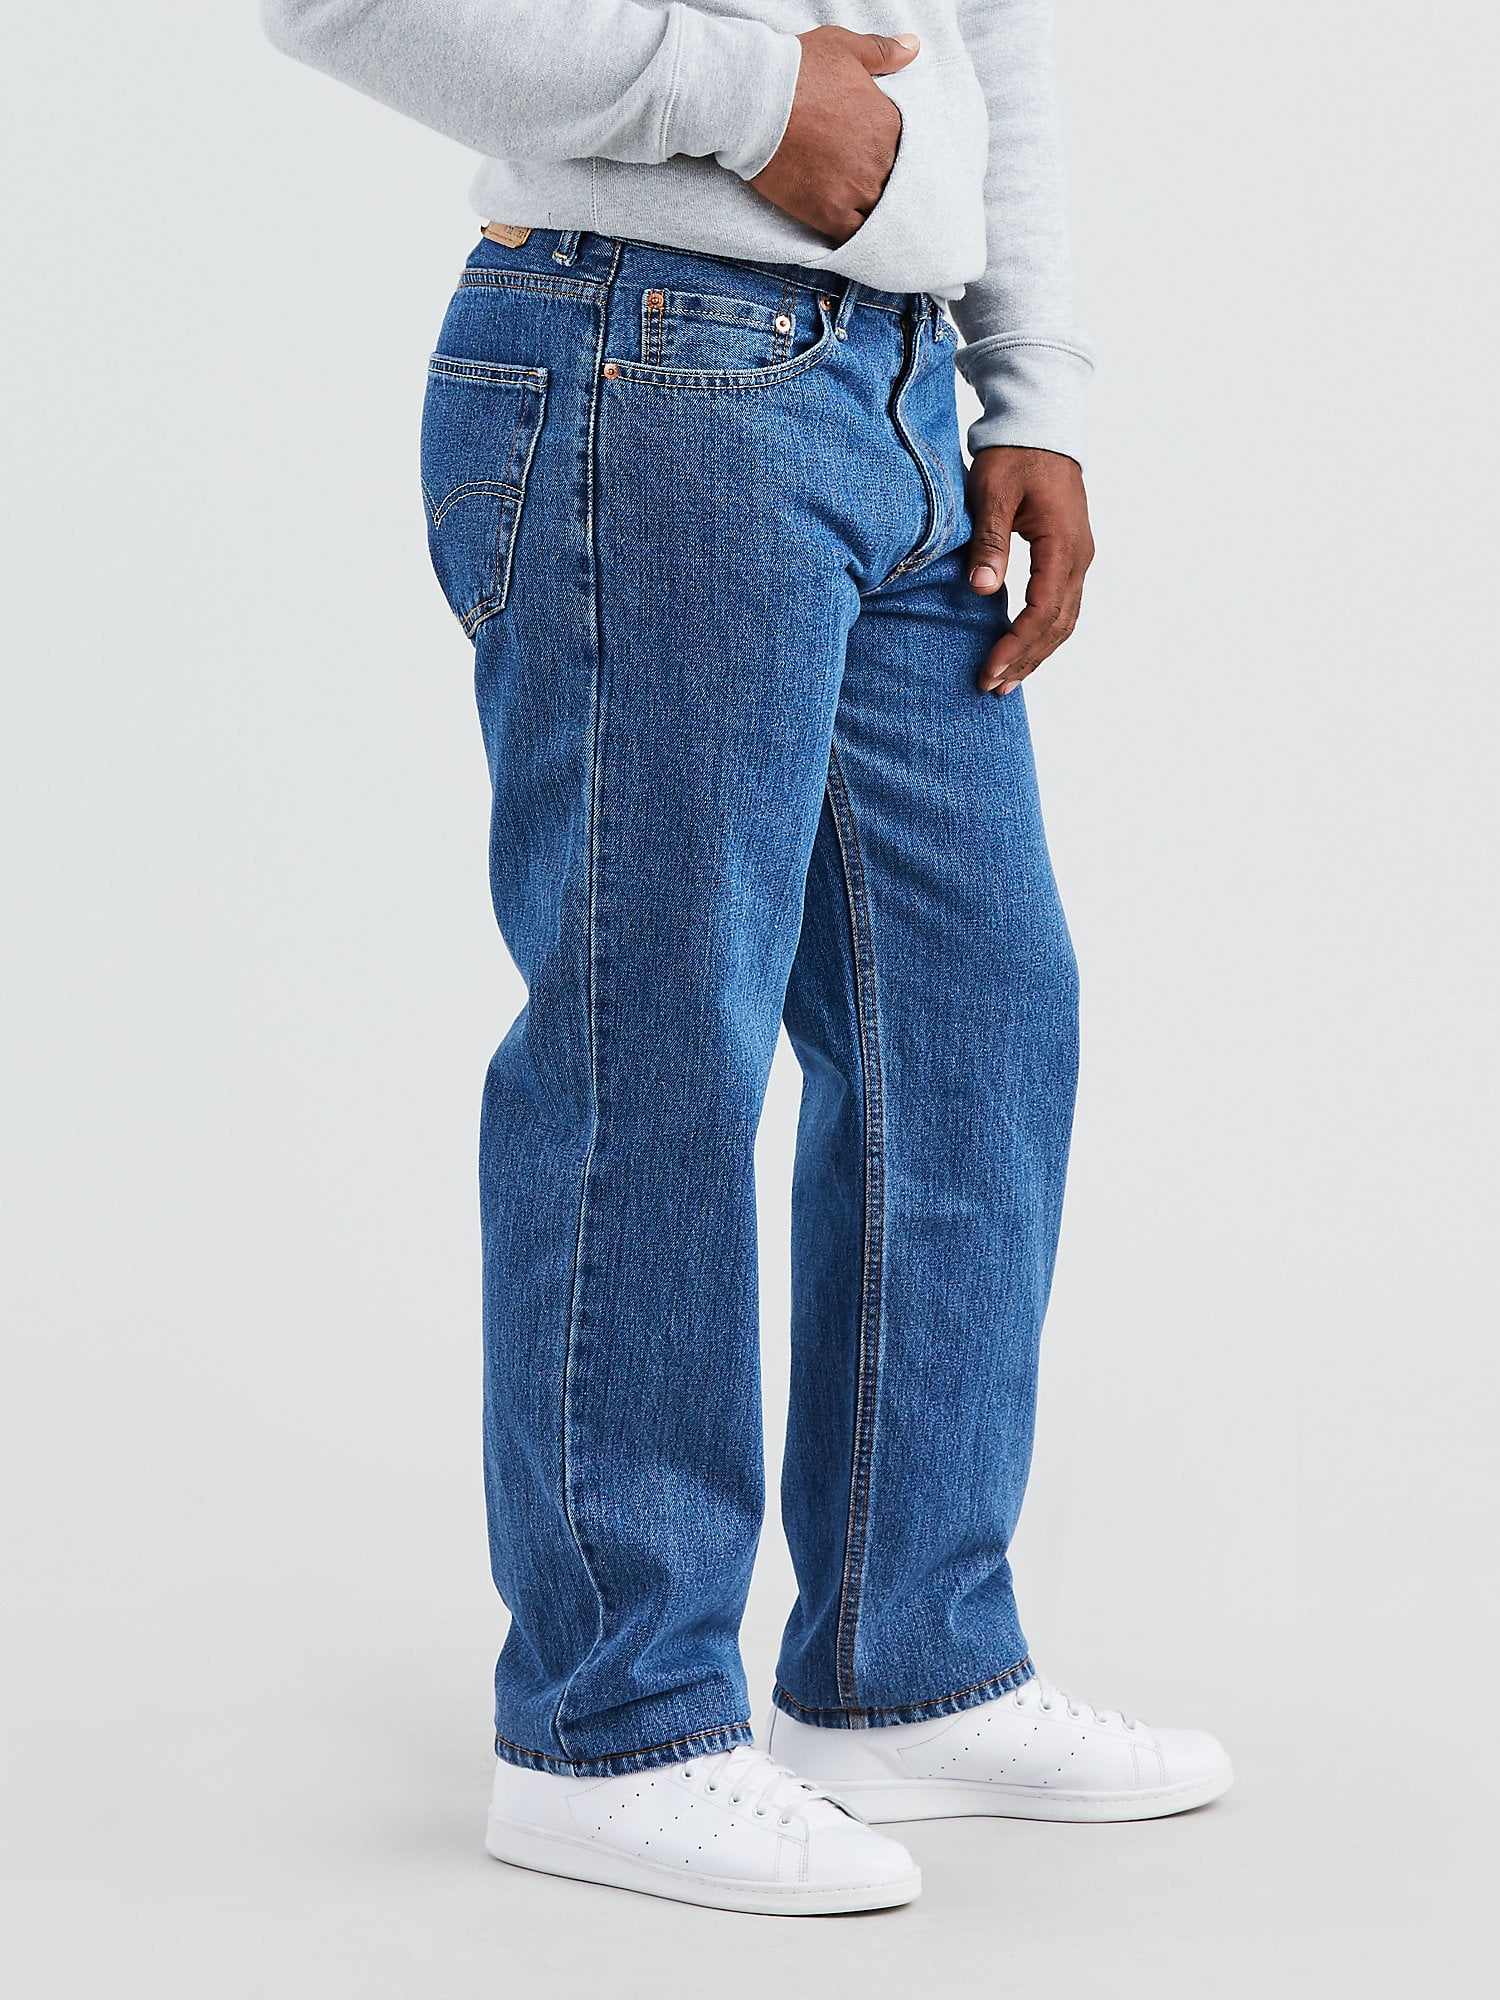 Levi's Men's Relaxed Fit Jeans Walmart.com